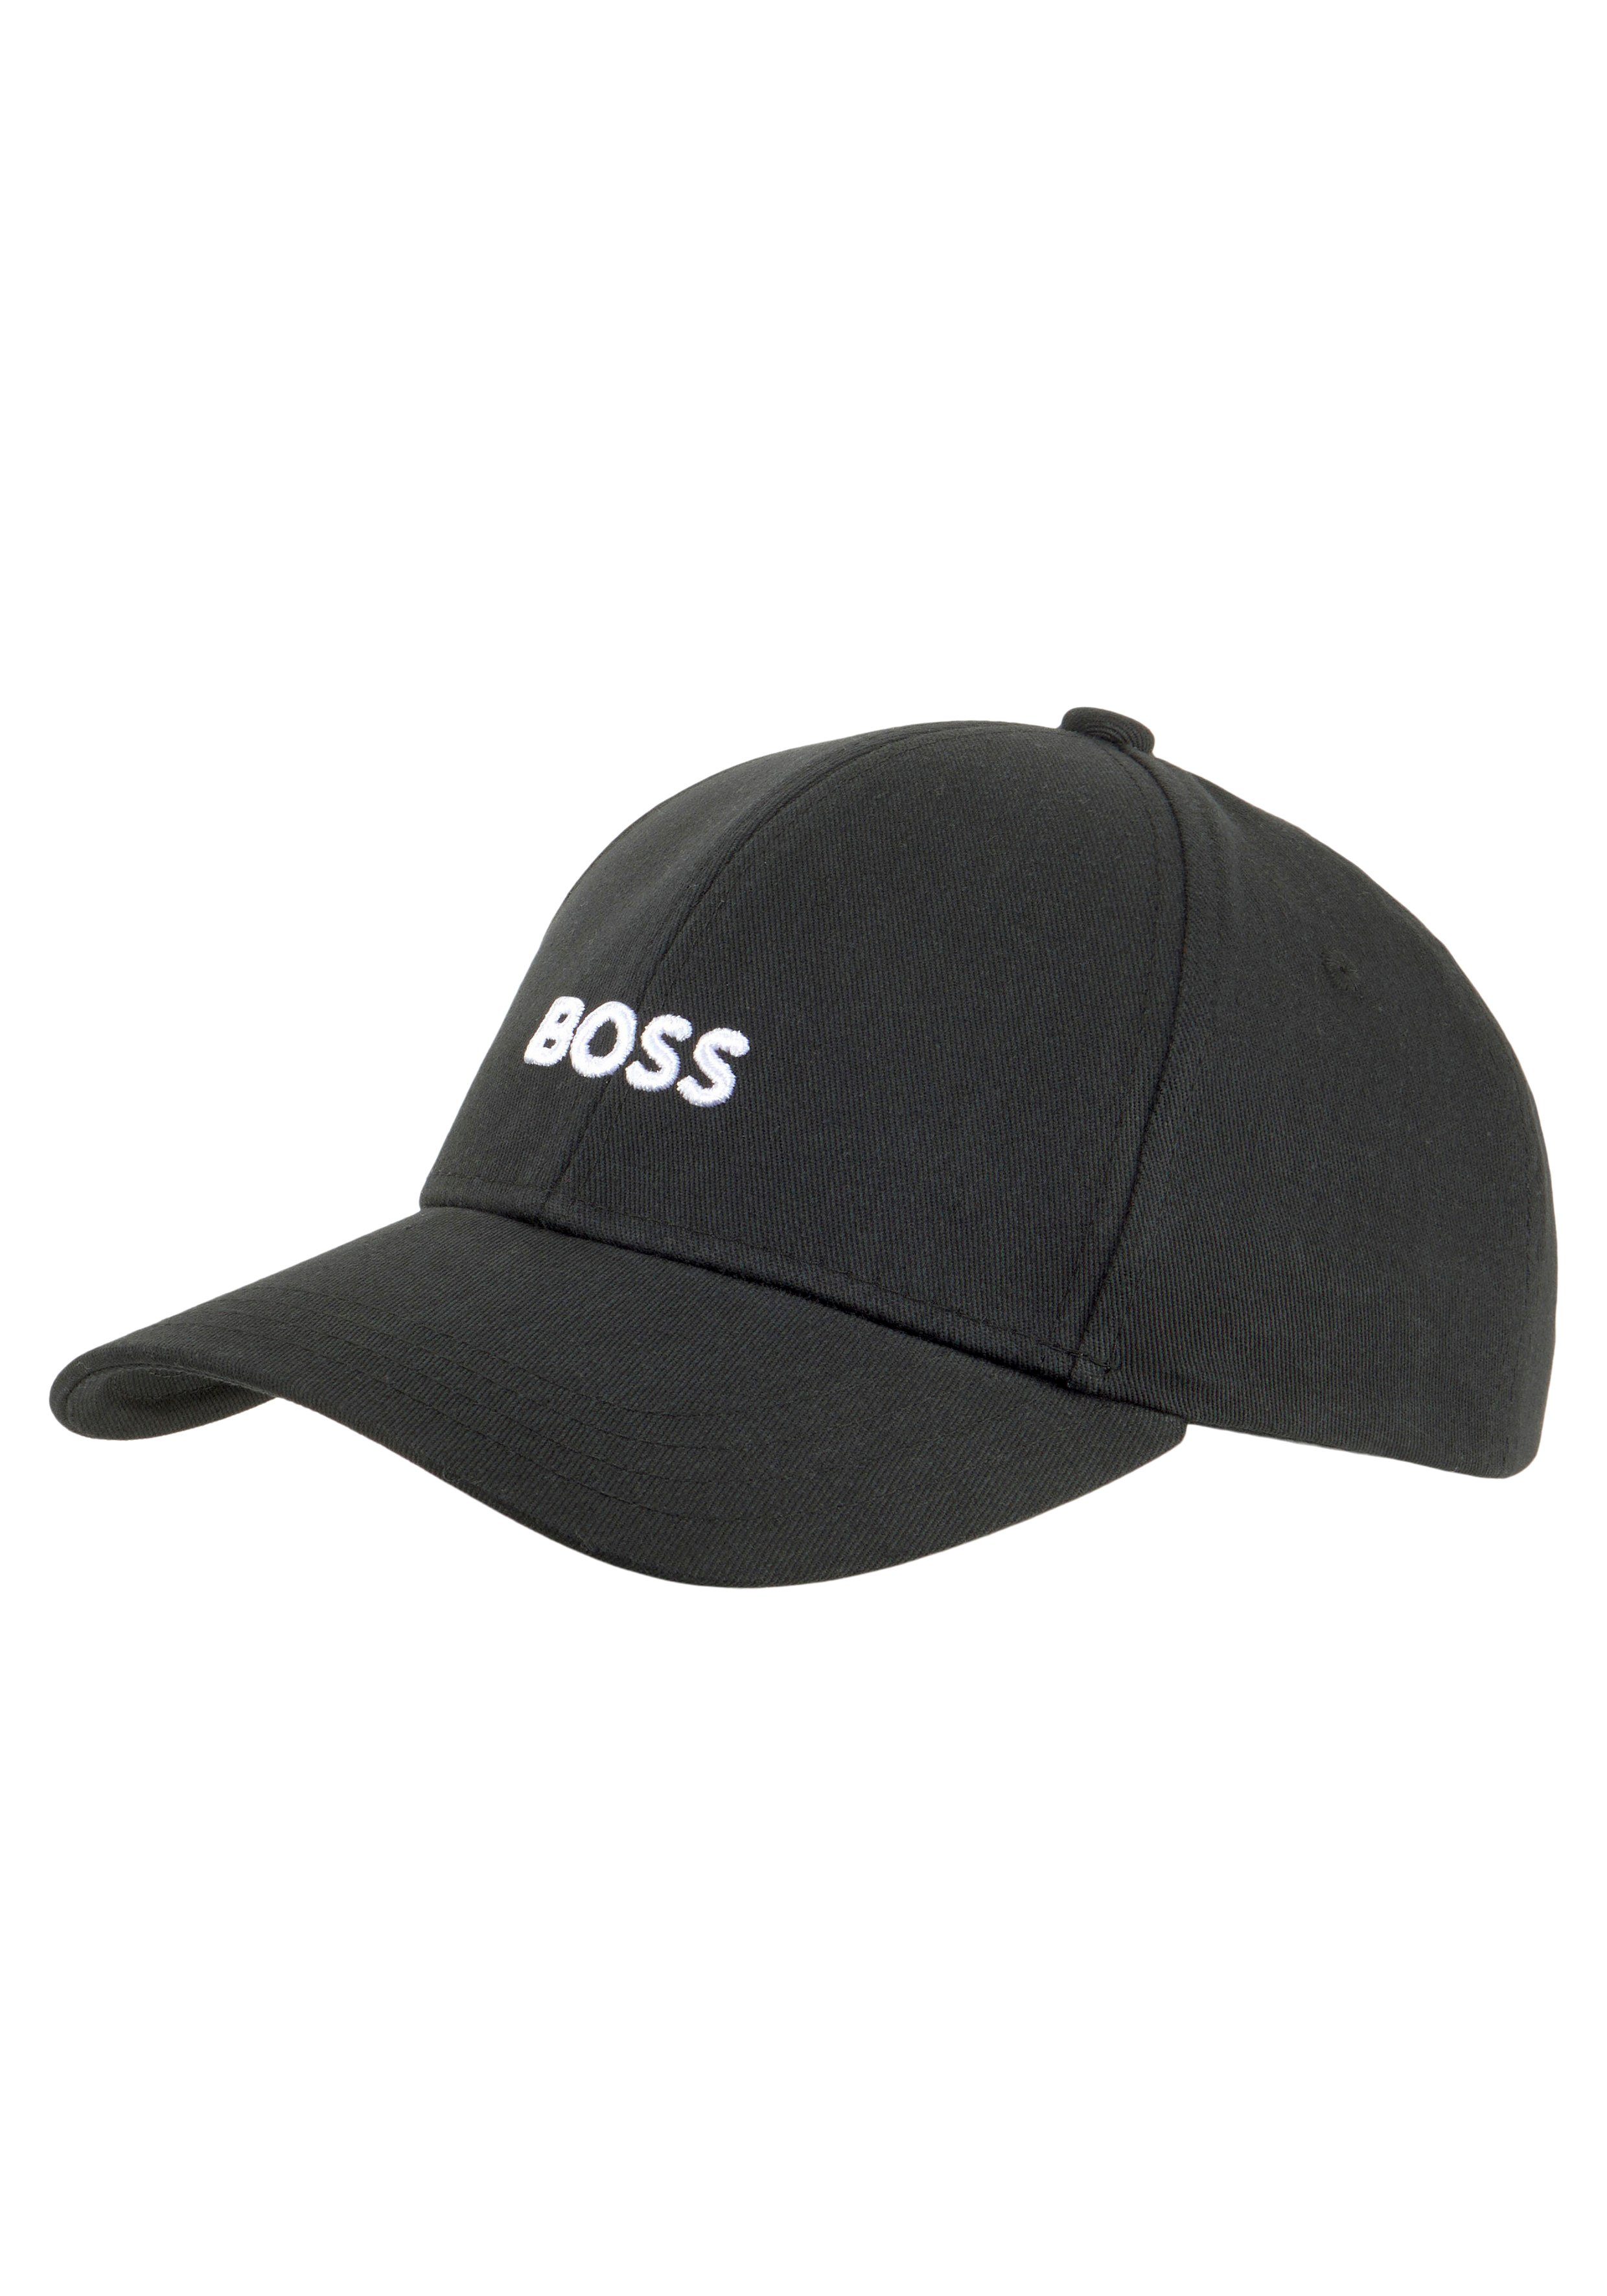 BOSS Baseball Cap Black Logostickerei Zed mit